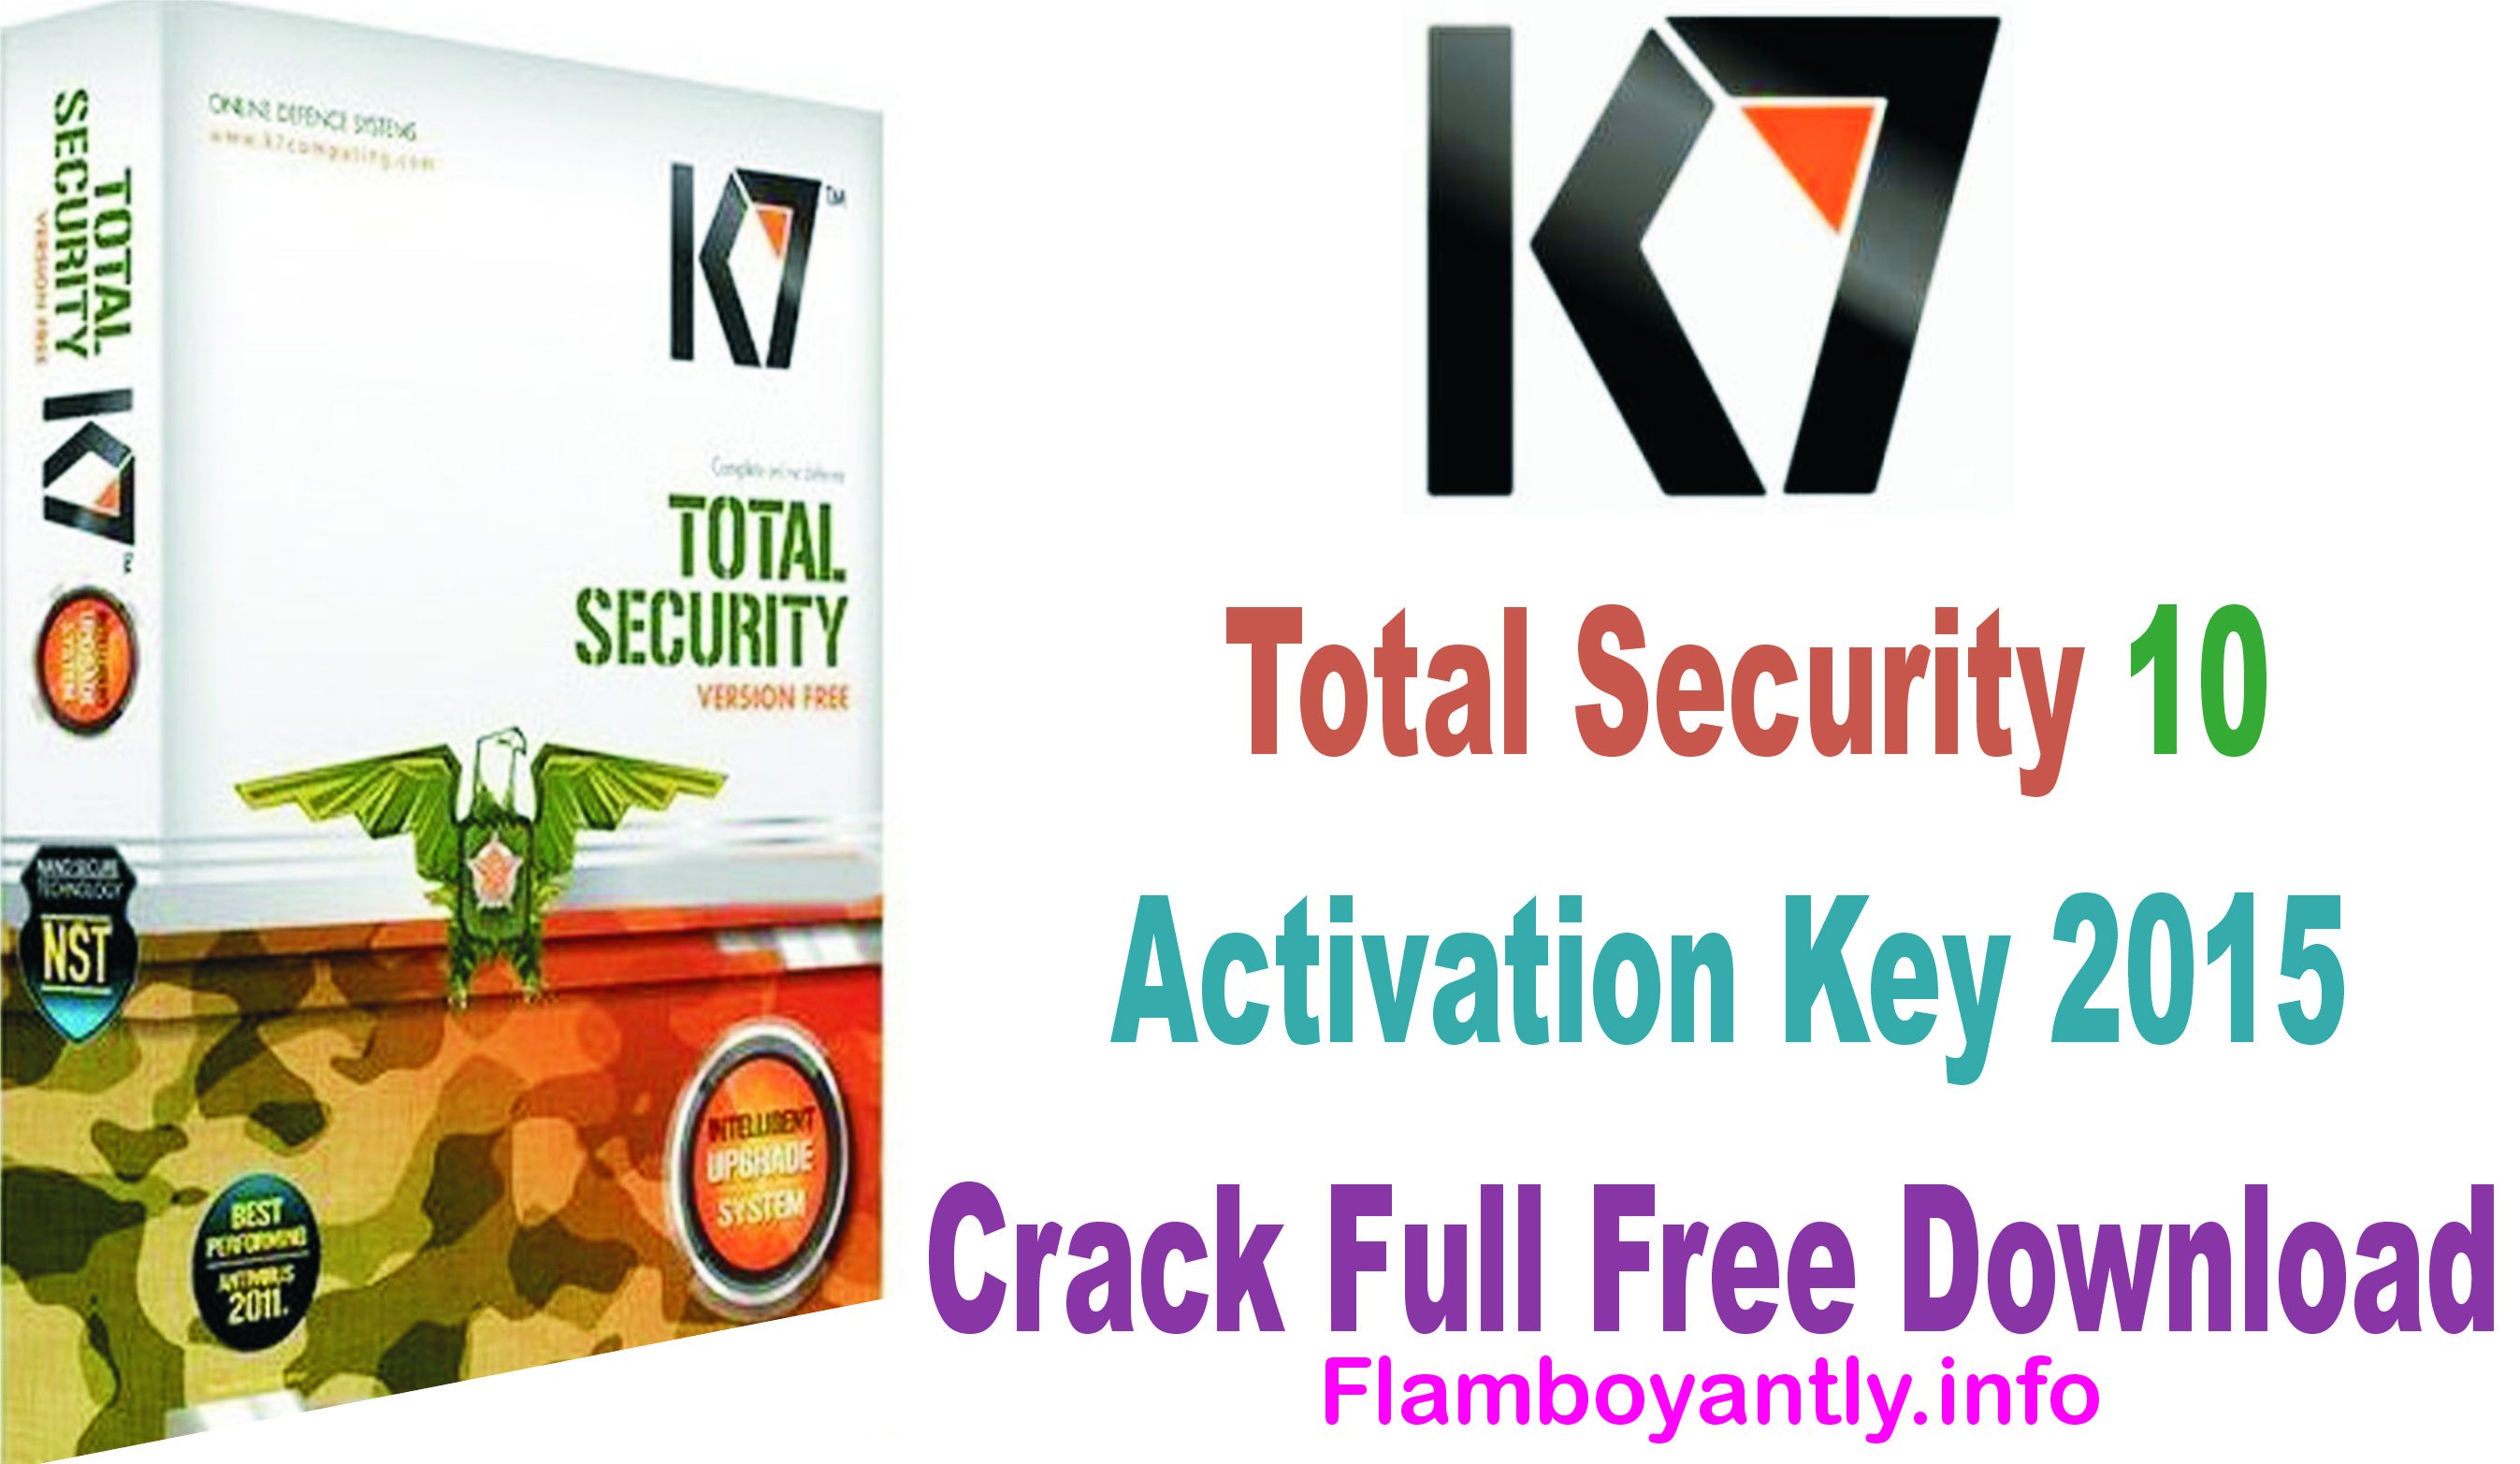 k7 total security key free